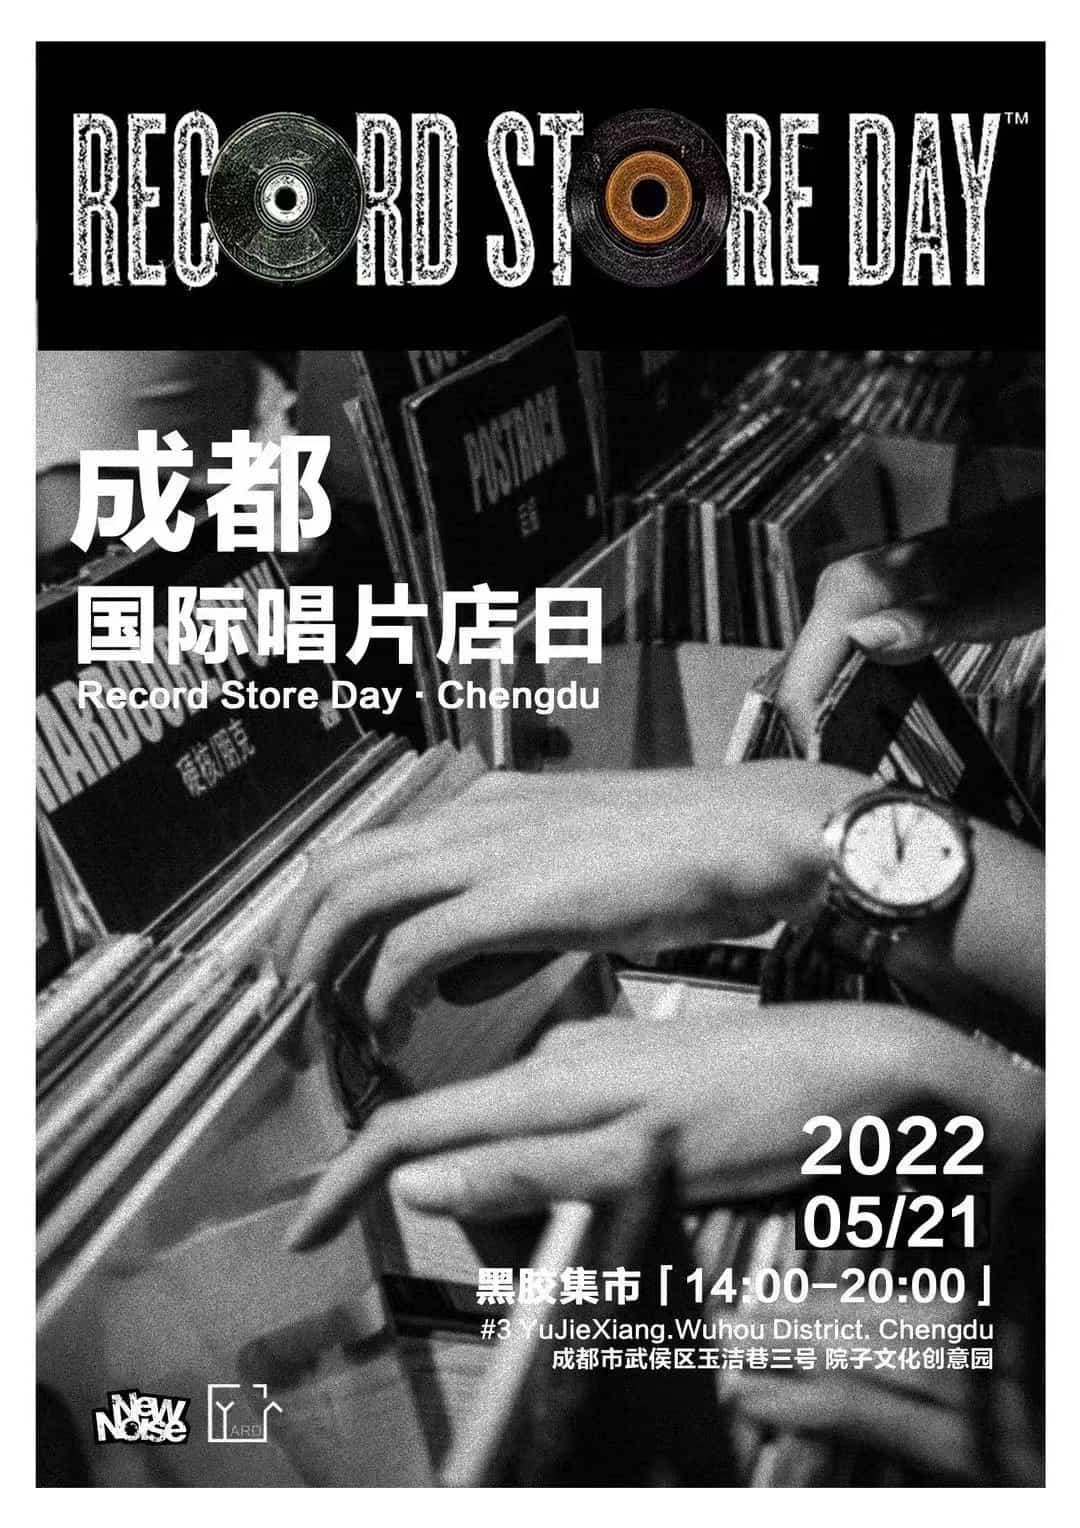 2022 Record Store Day Chengdu chengdu expat